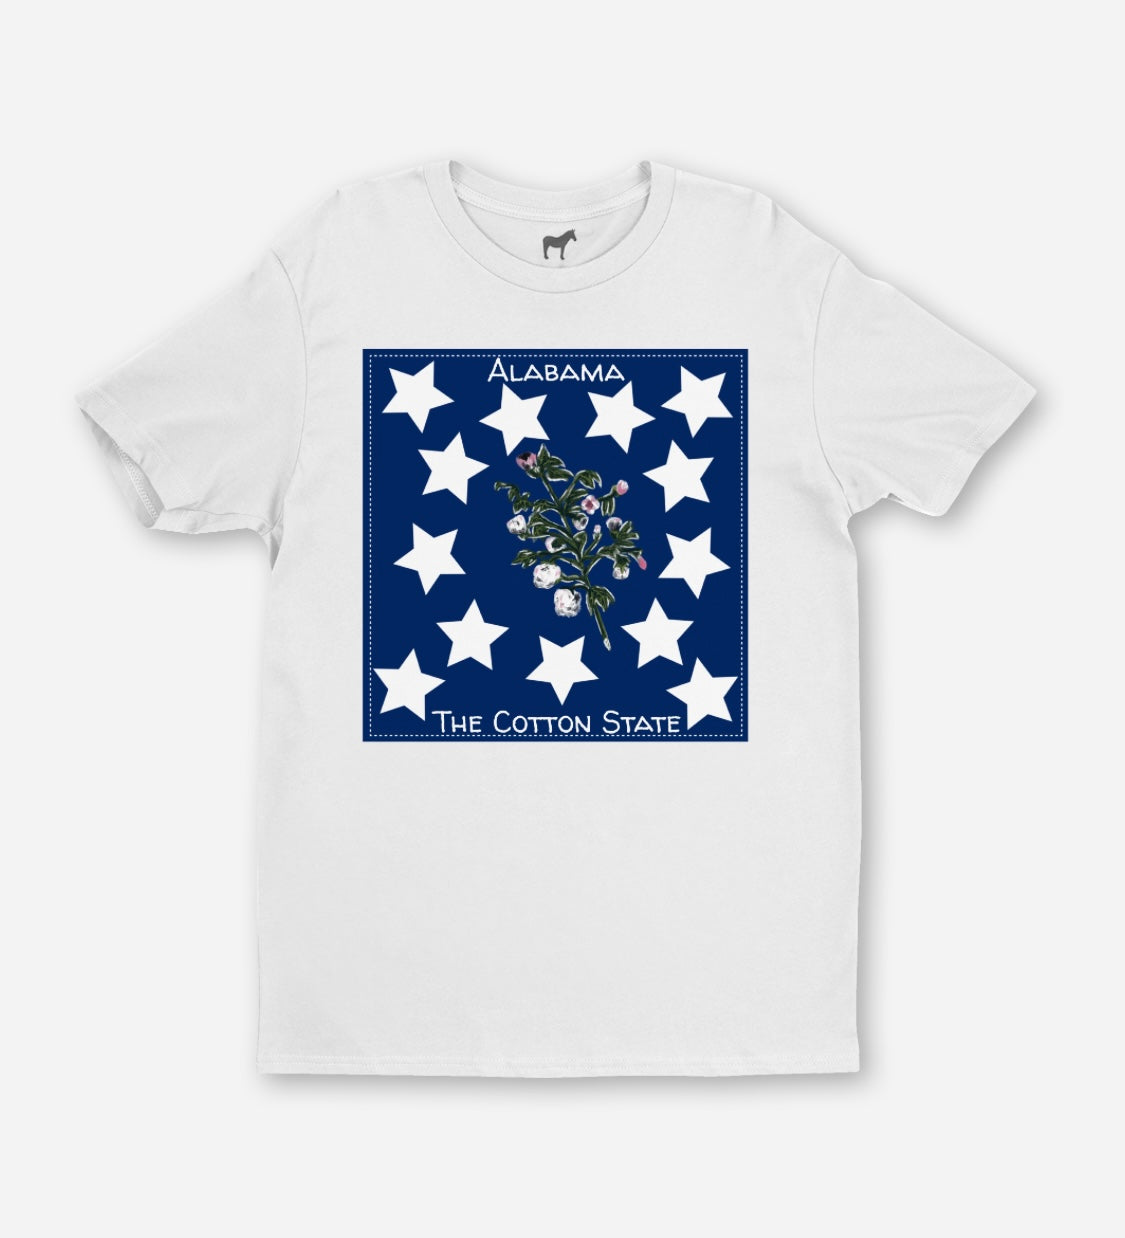 Alabama - The Cotton State Shirt